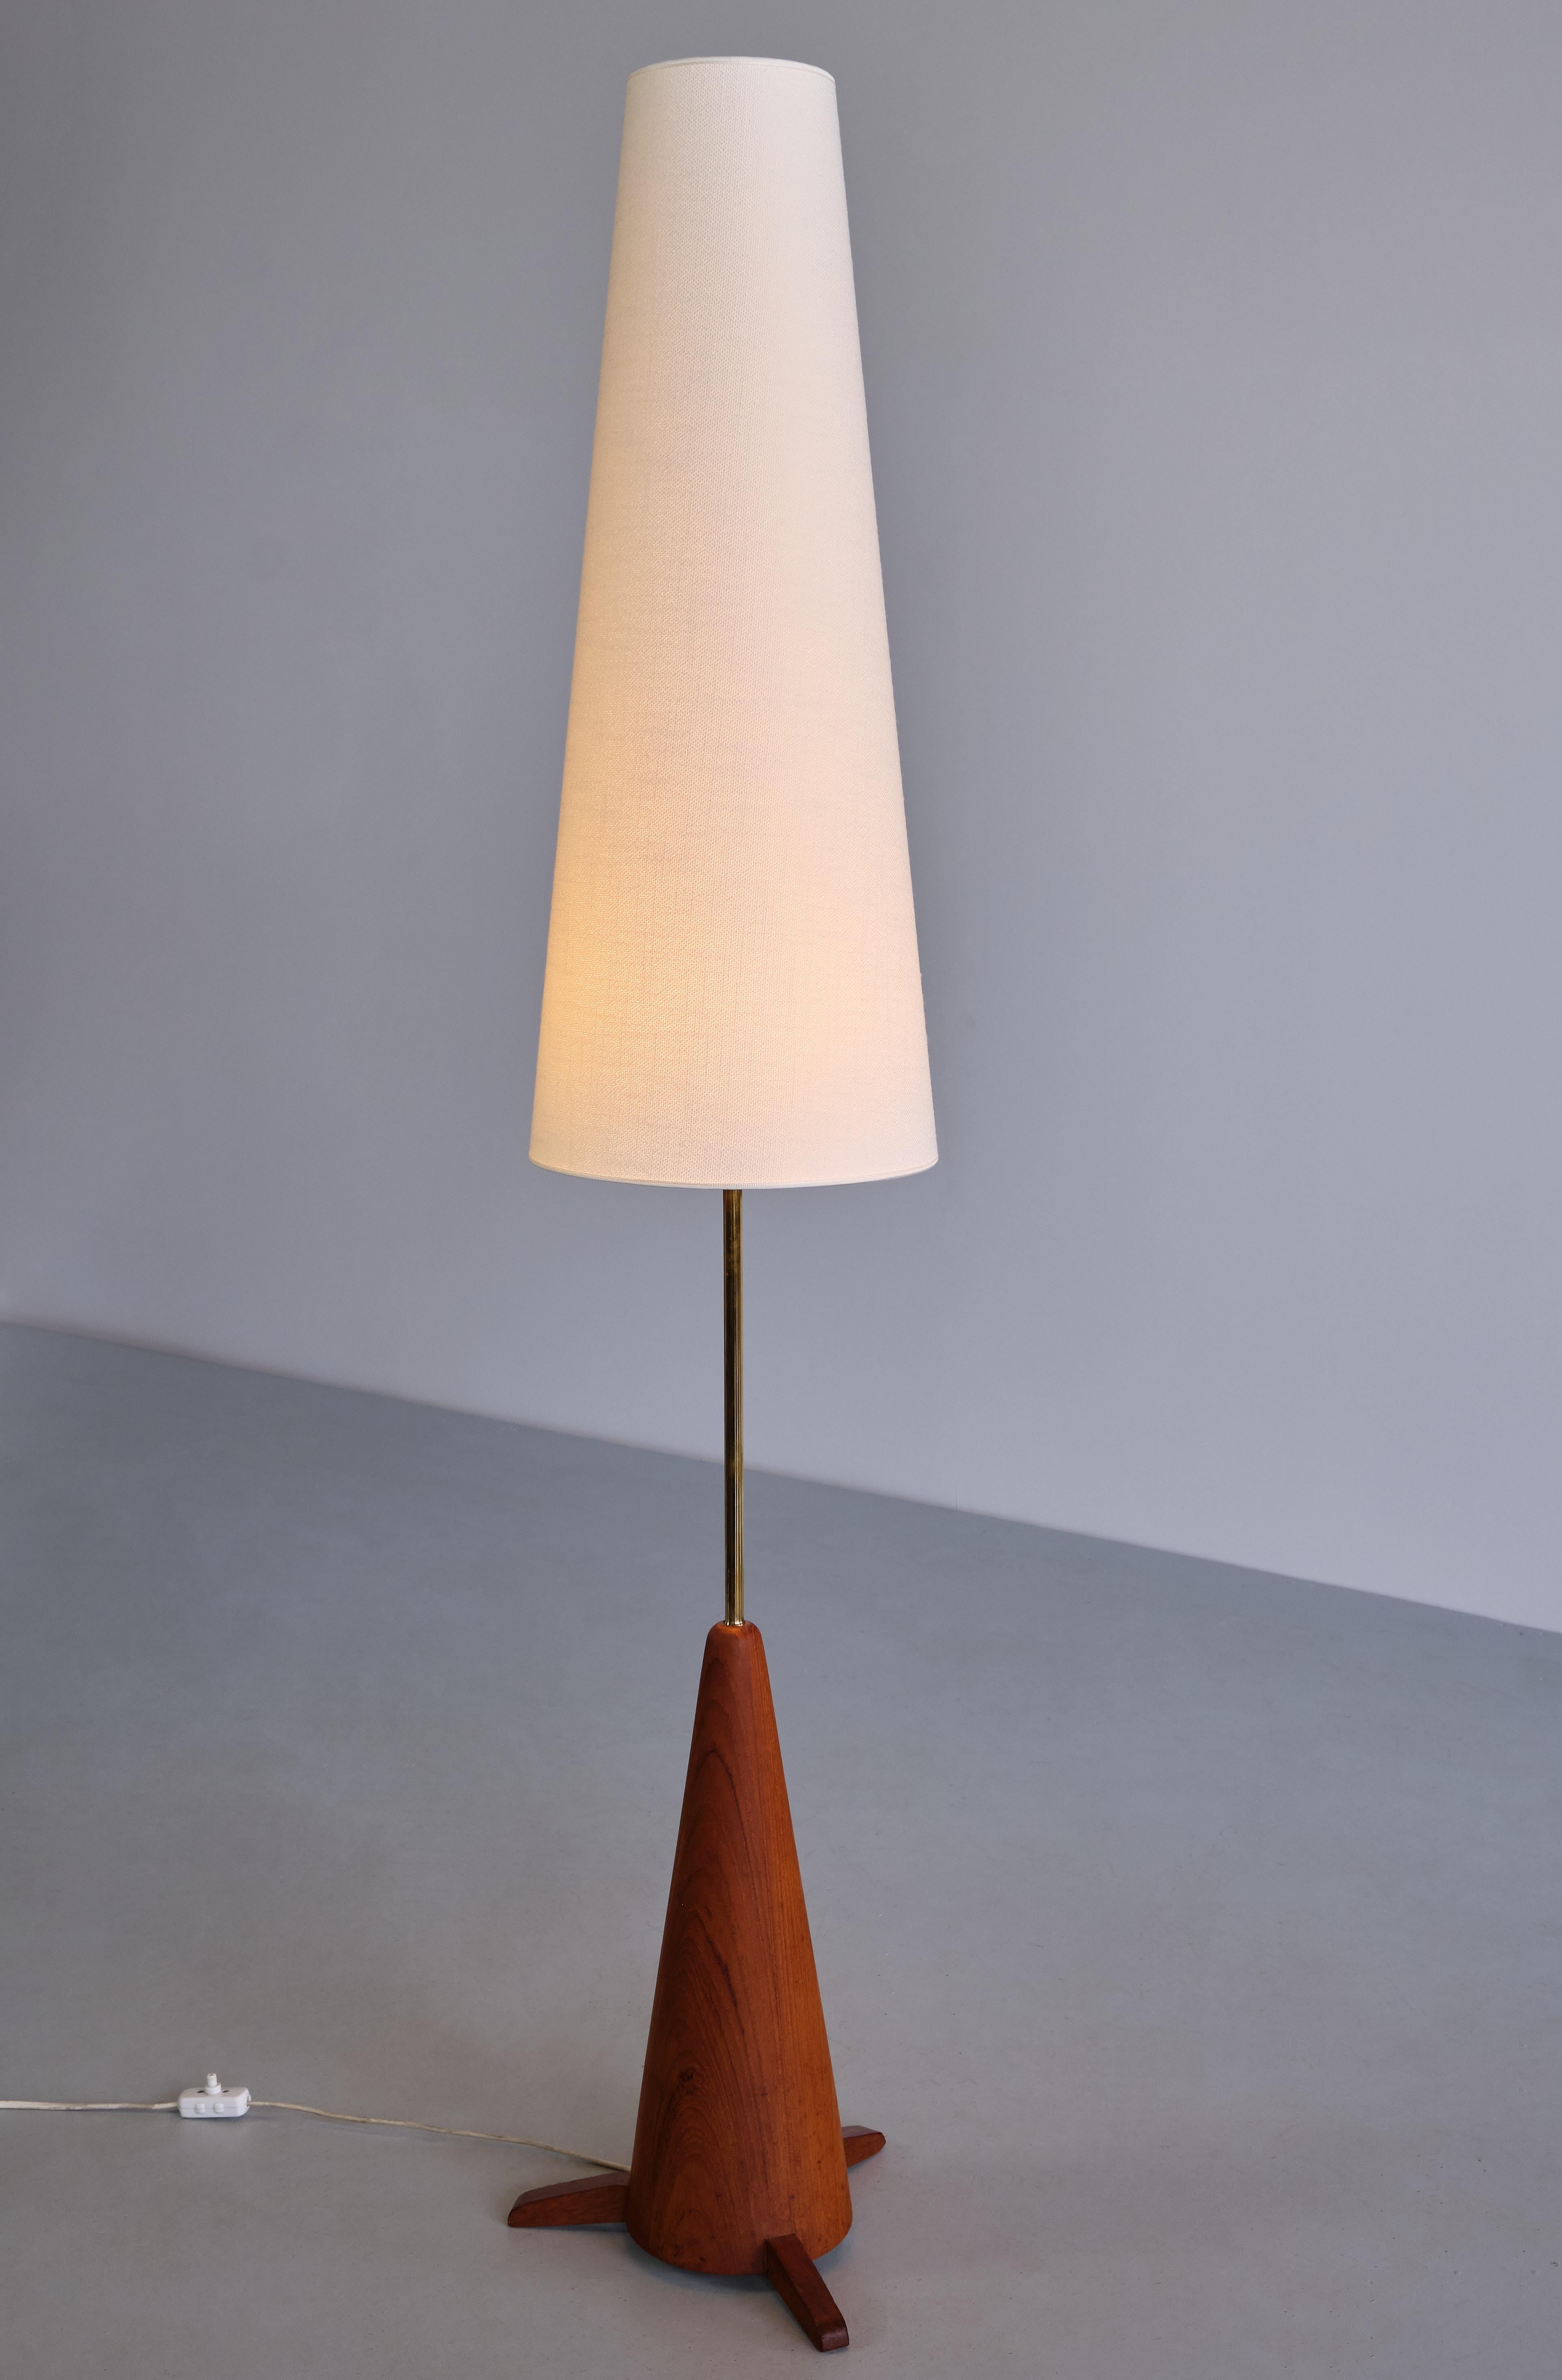 Mid-20th Century Möllers Armaturfabrik Eskiltuna Floor Lamp in Teak and Brass, Sweden, 1950s For Sale